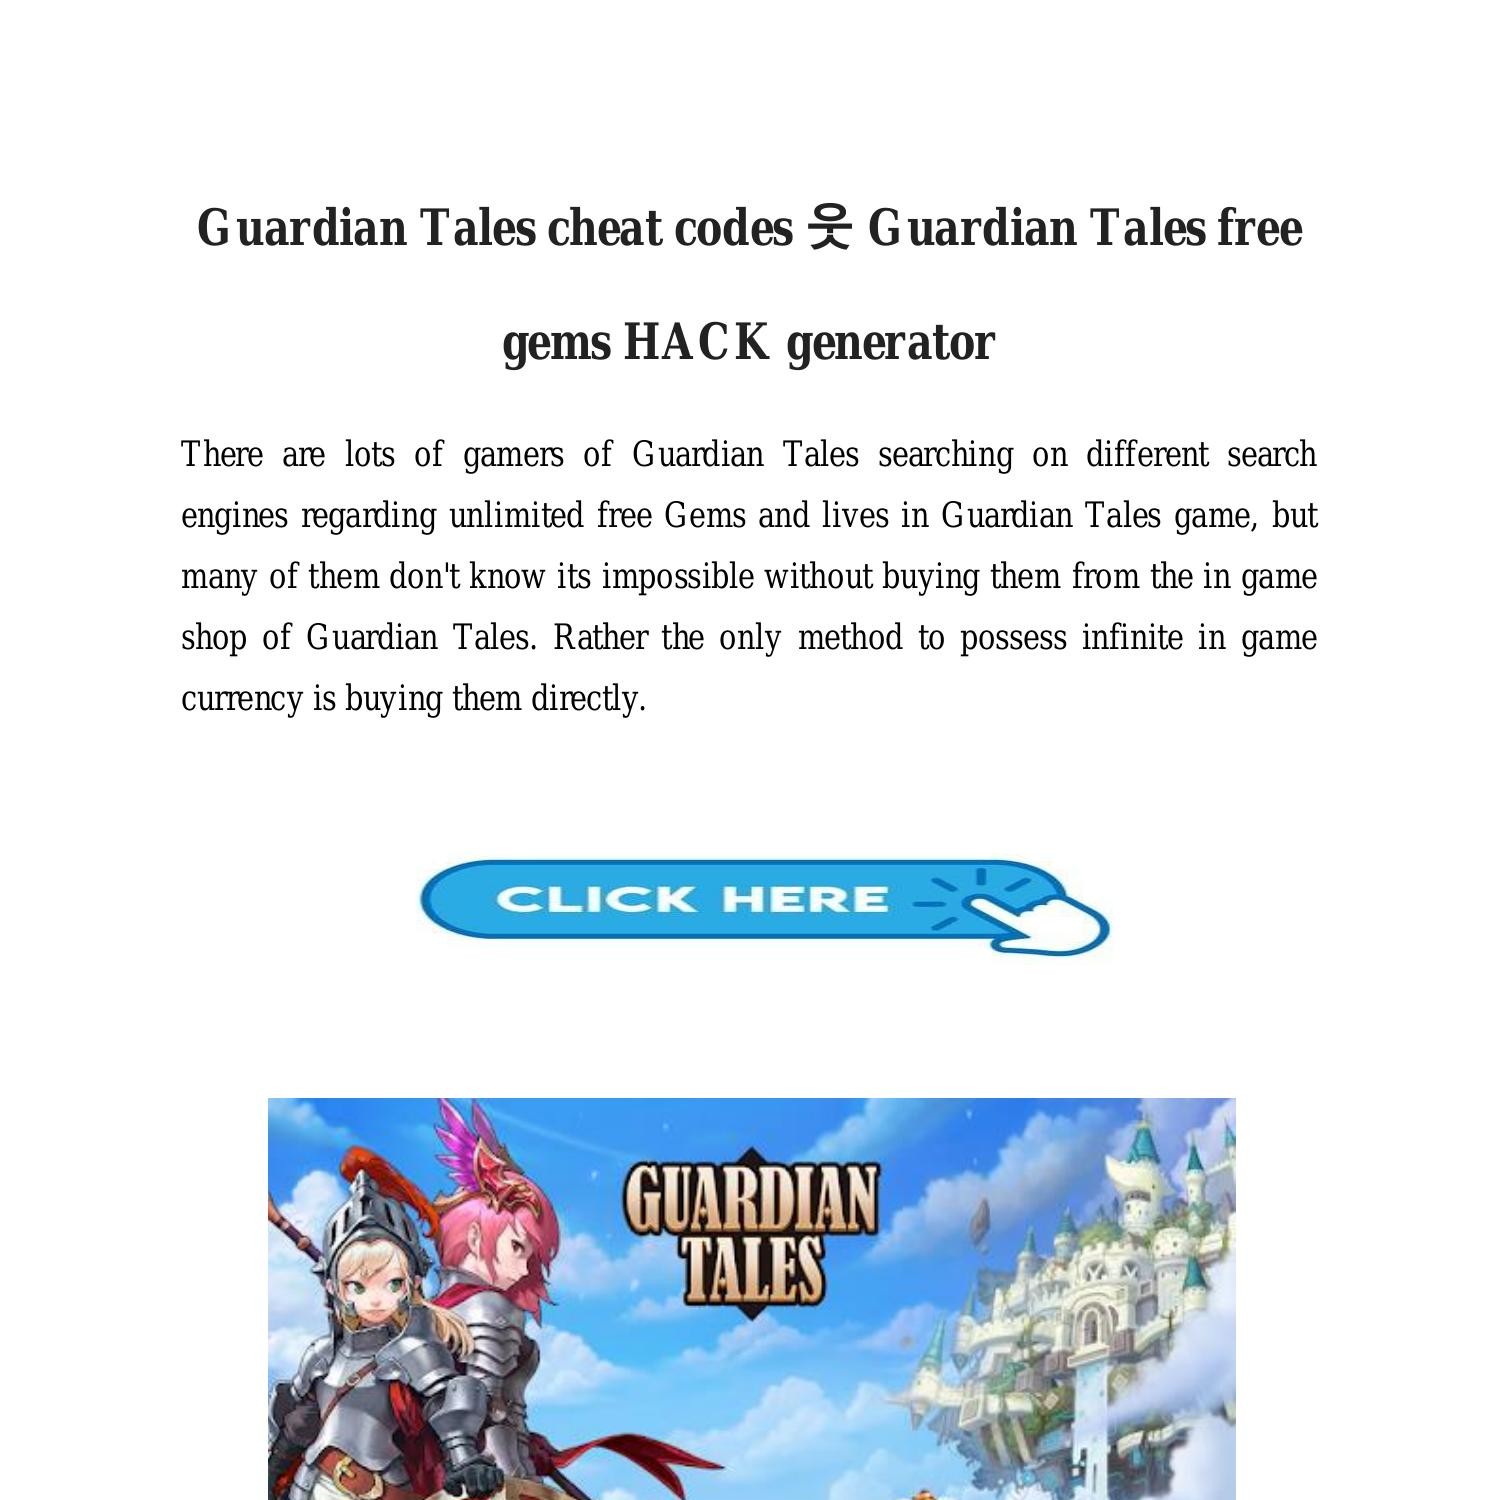 Guardian Tales cheat codes 웃 Guardian Tales free gems HACK generator